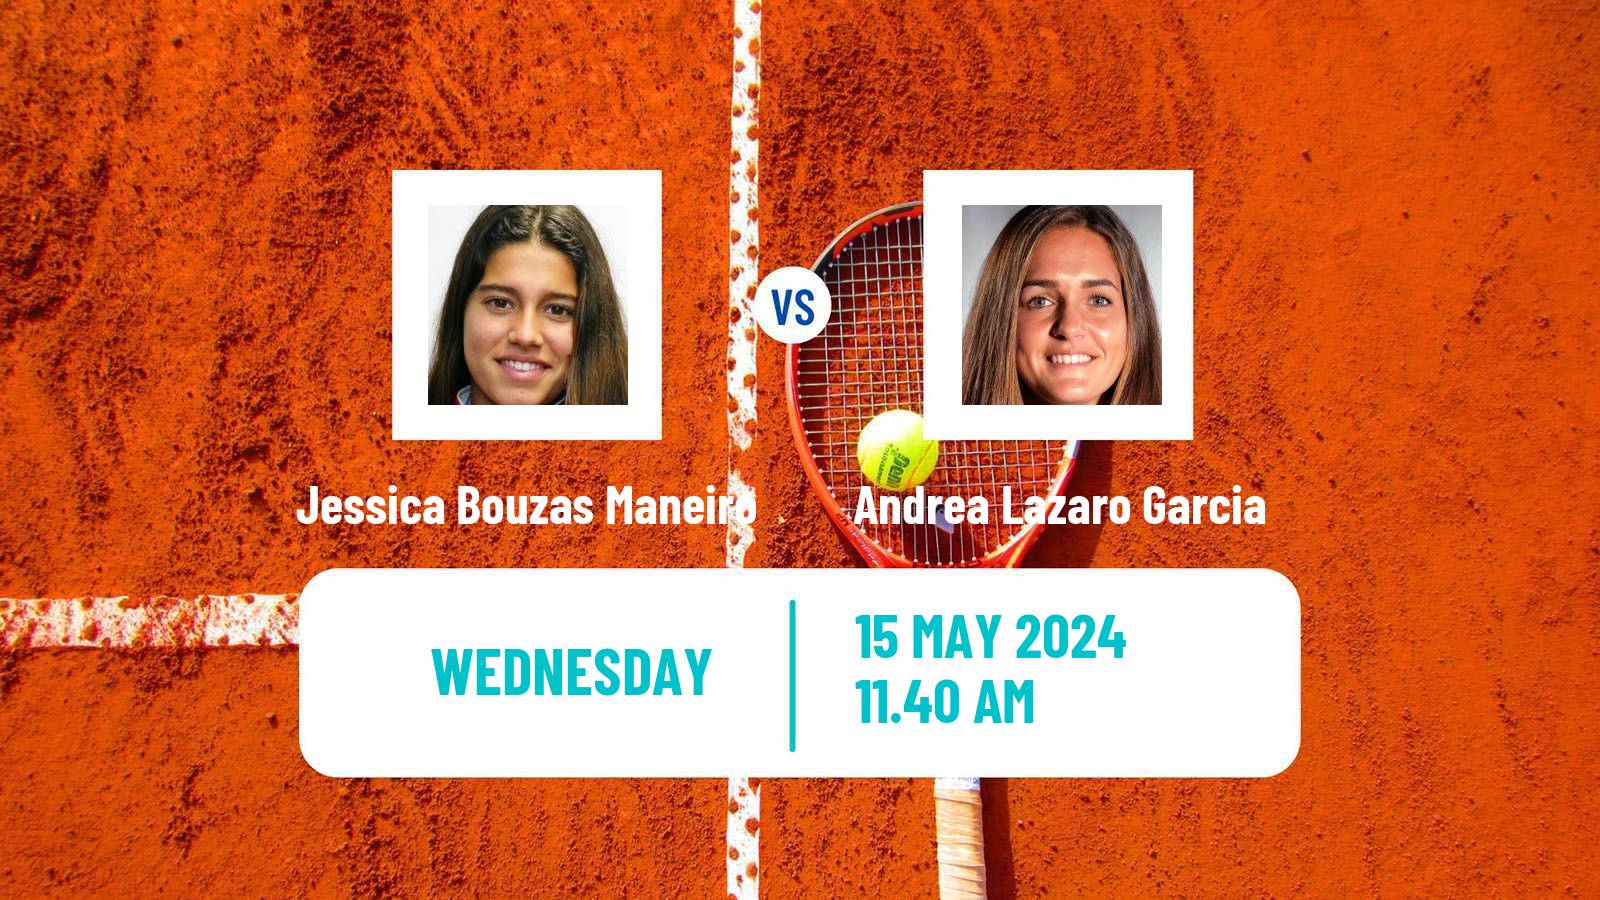 Tennis ITF W100 Madrid Women Jessica Bouzas Maneiro - Andrea Lazaro Garcia